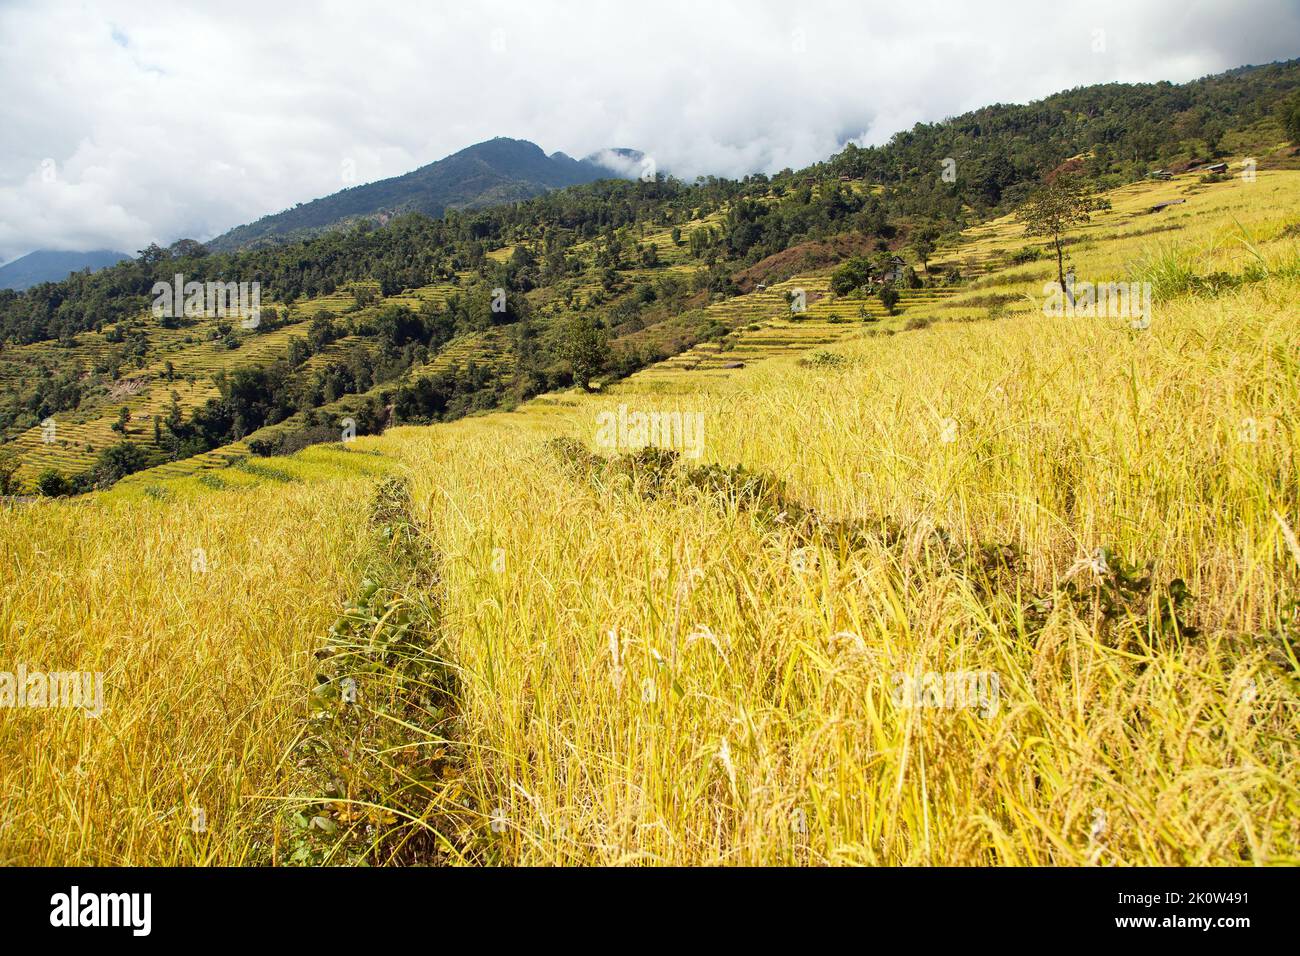 golden terrassenförmig angelegter Reis oder Reisfeld in Nepal Himalaya Berge Wunderschöne himalaya-Landschaft Stockfoto